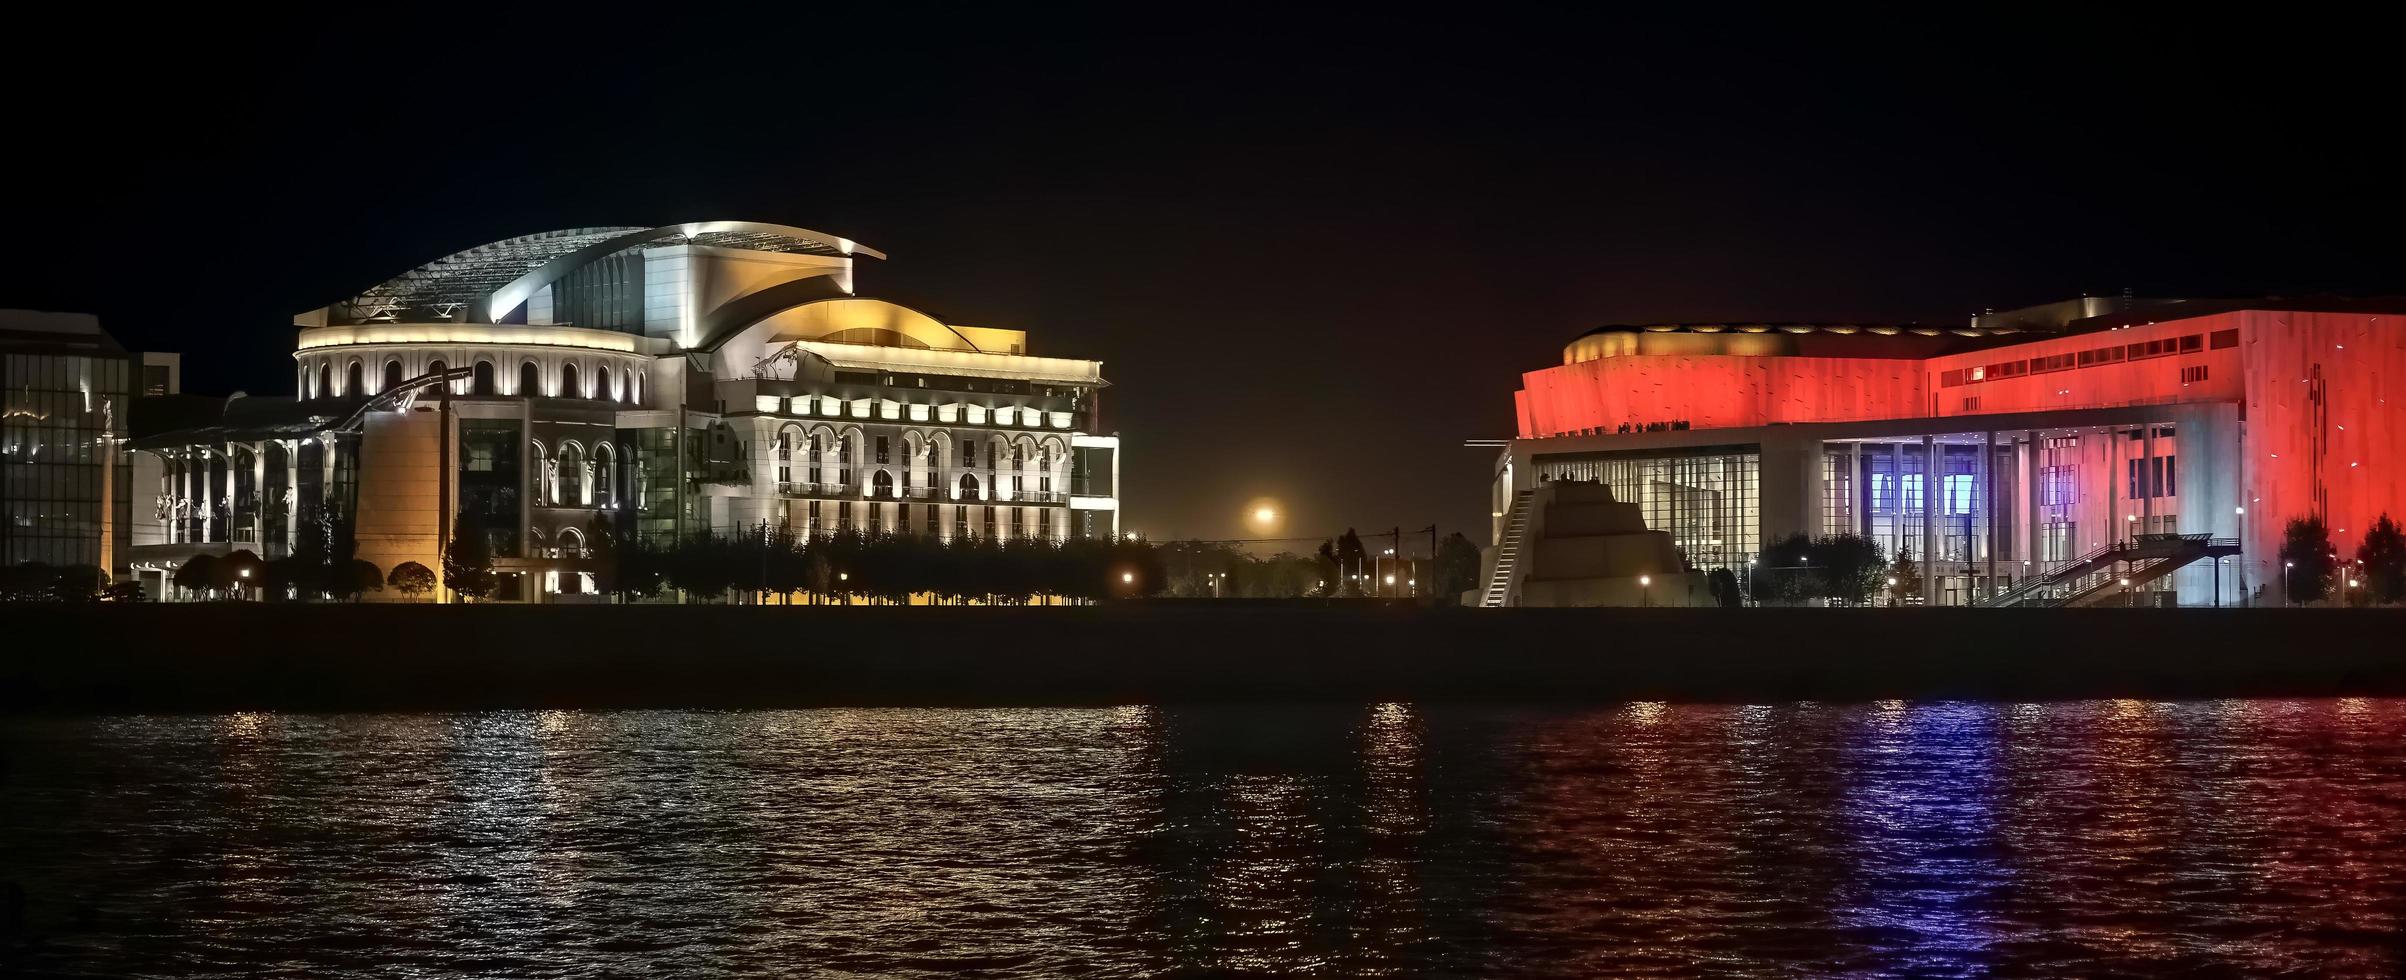 budapest, ungarn, 2014. nationaltheater und ludwigsmuseum nachts beleuchtet in budapest foto